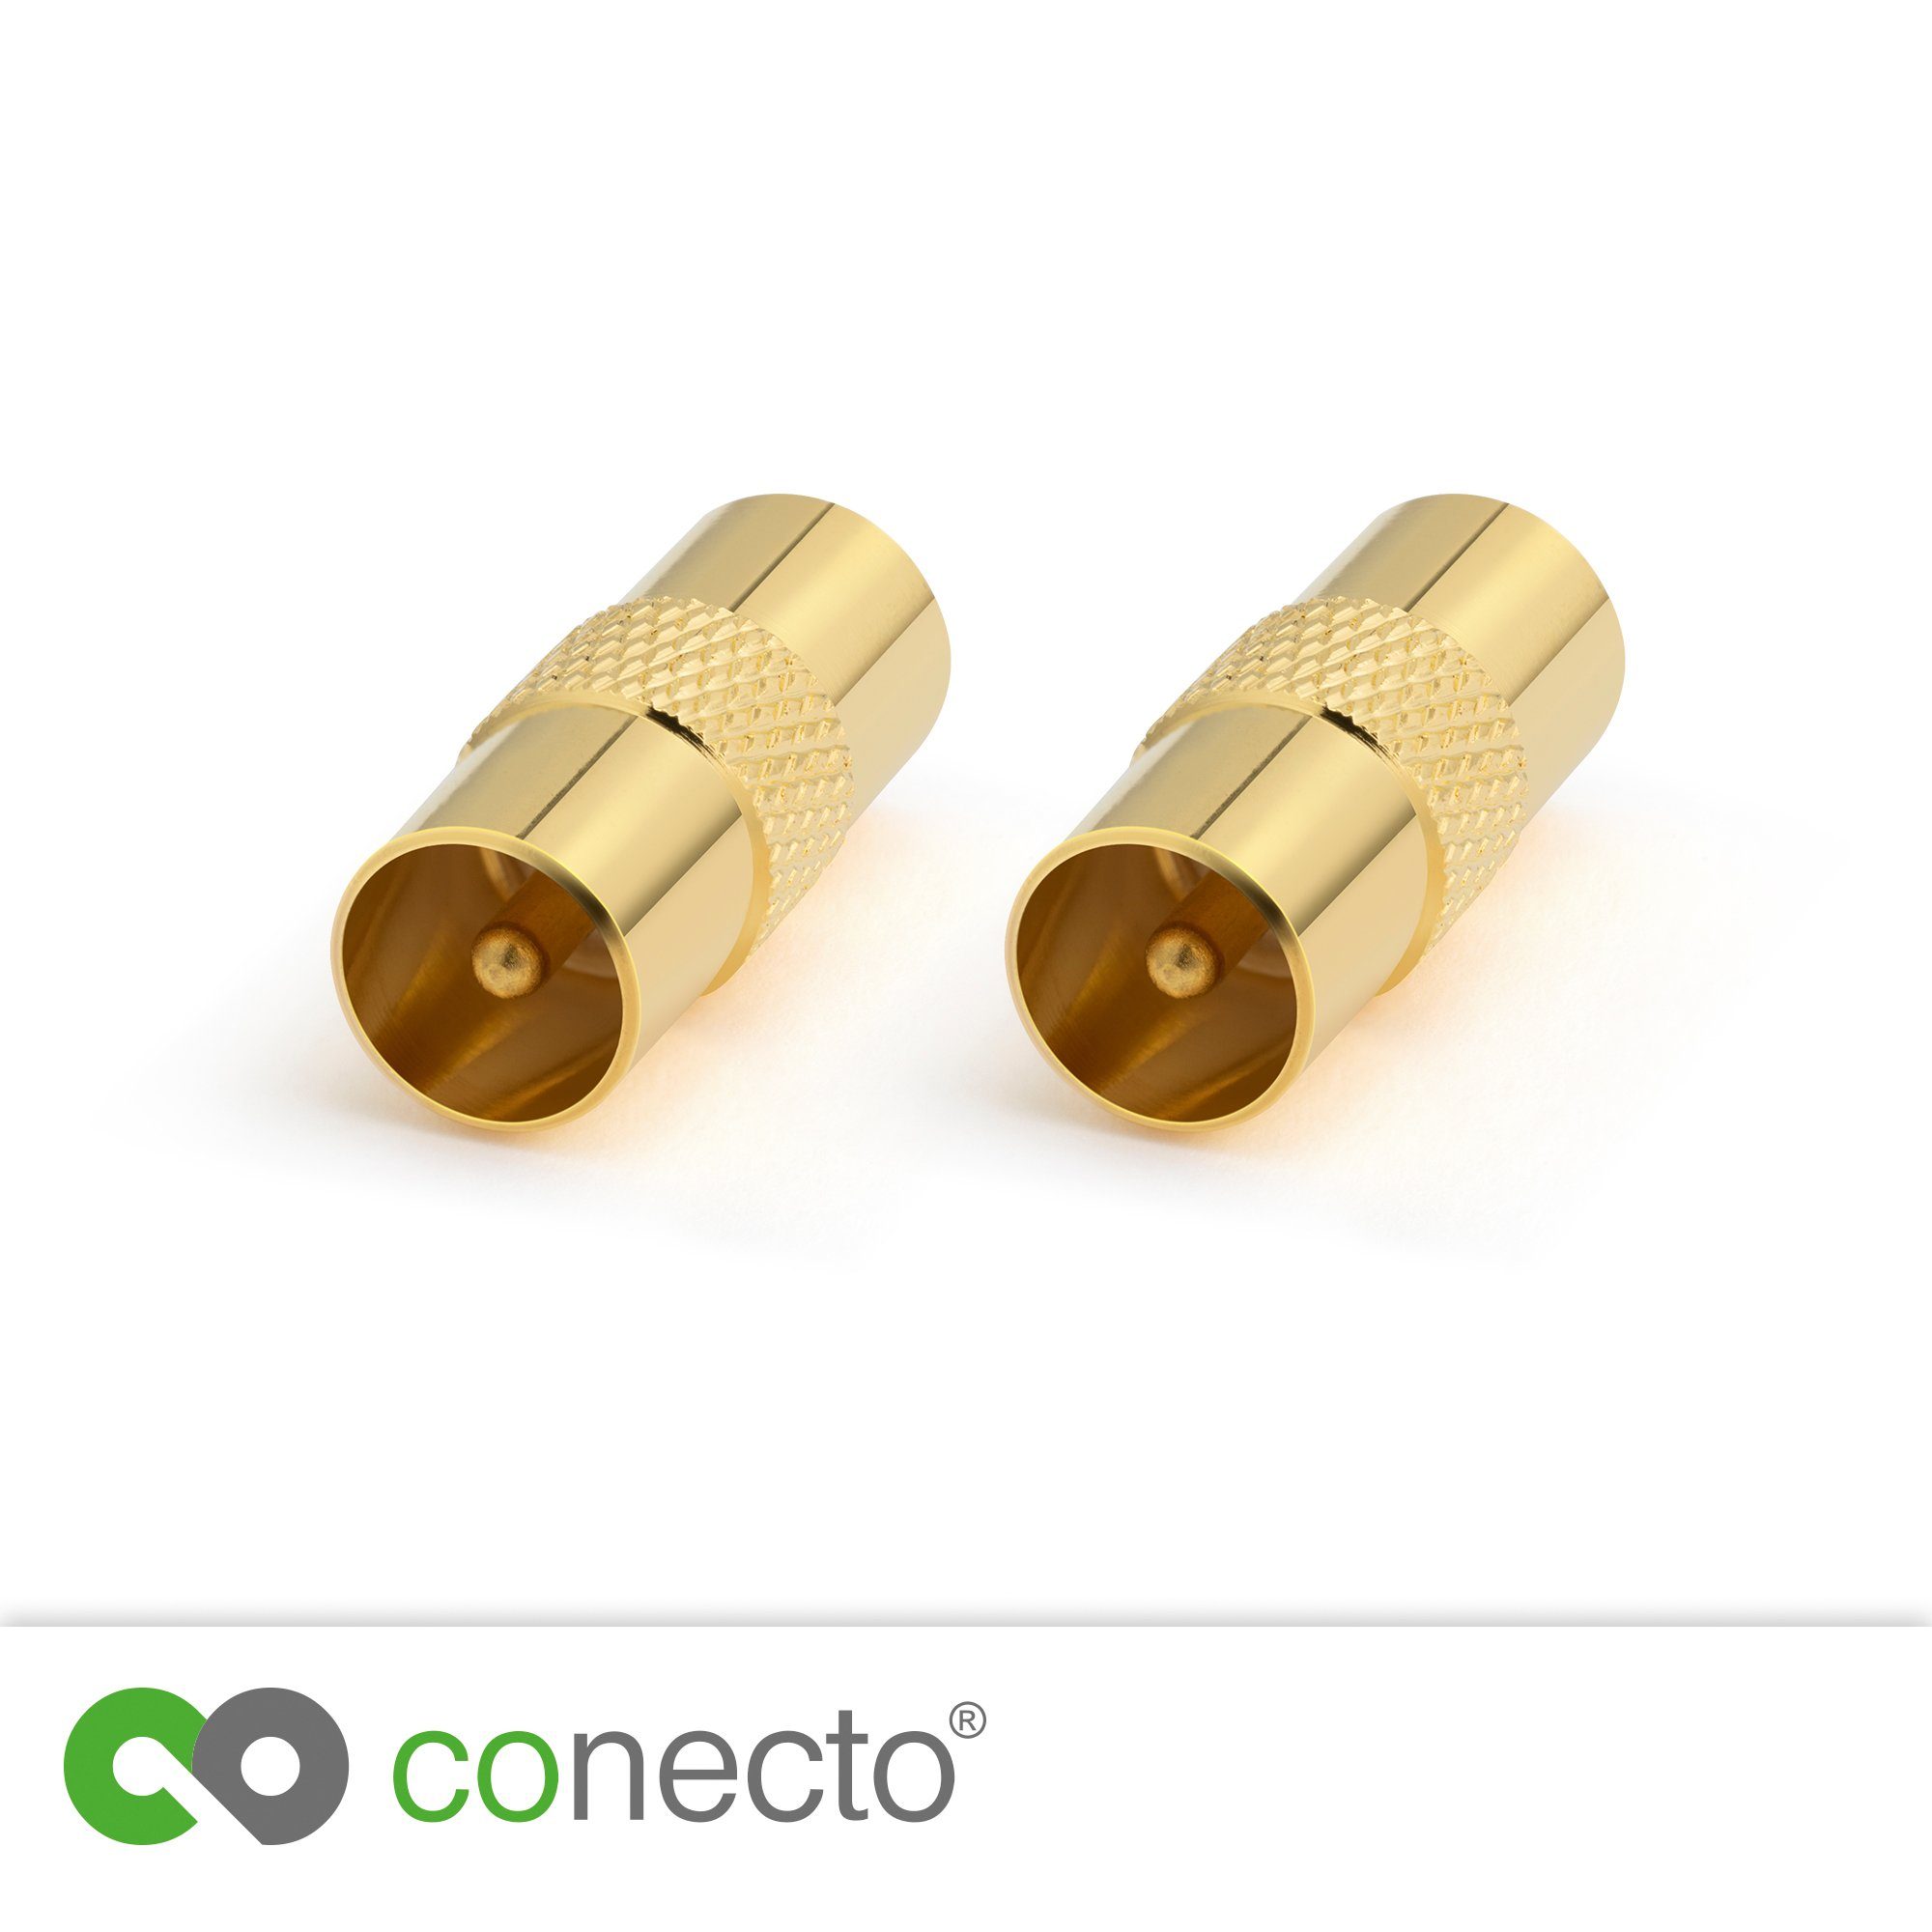 zum Antennen-Adapter, IEC-Stecker conecto conecto Adapter SAT-Kabel IEC-Stecker, auf